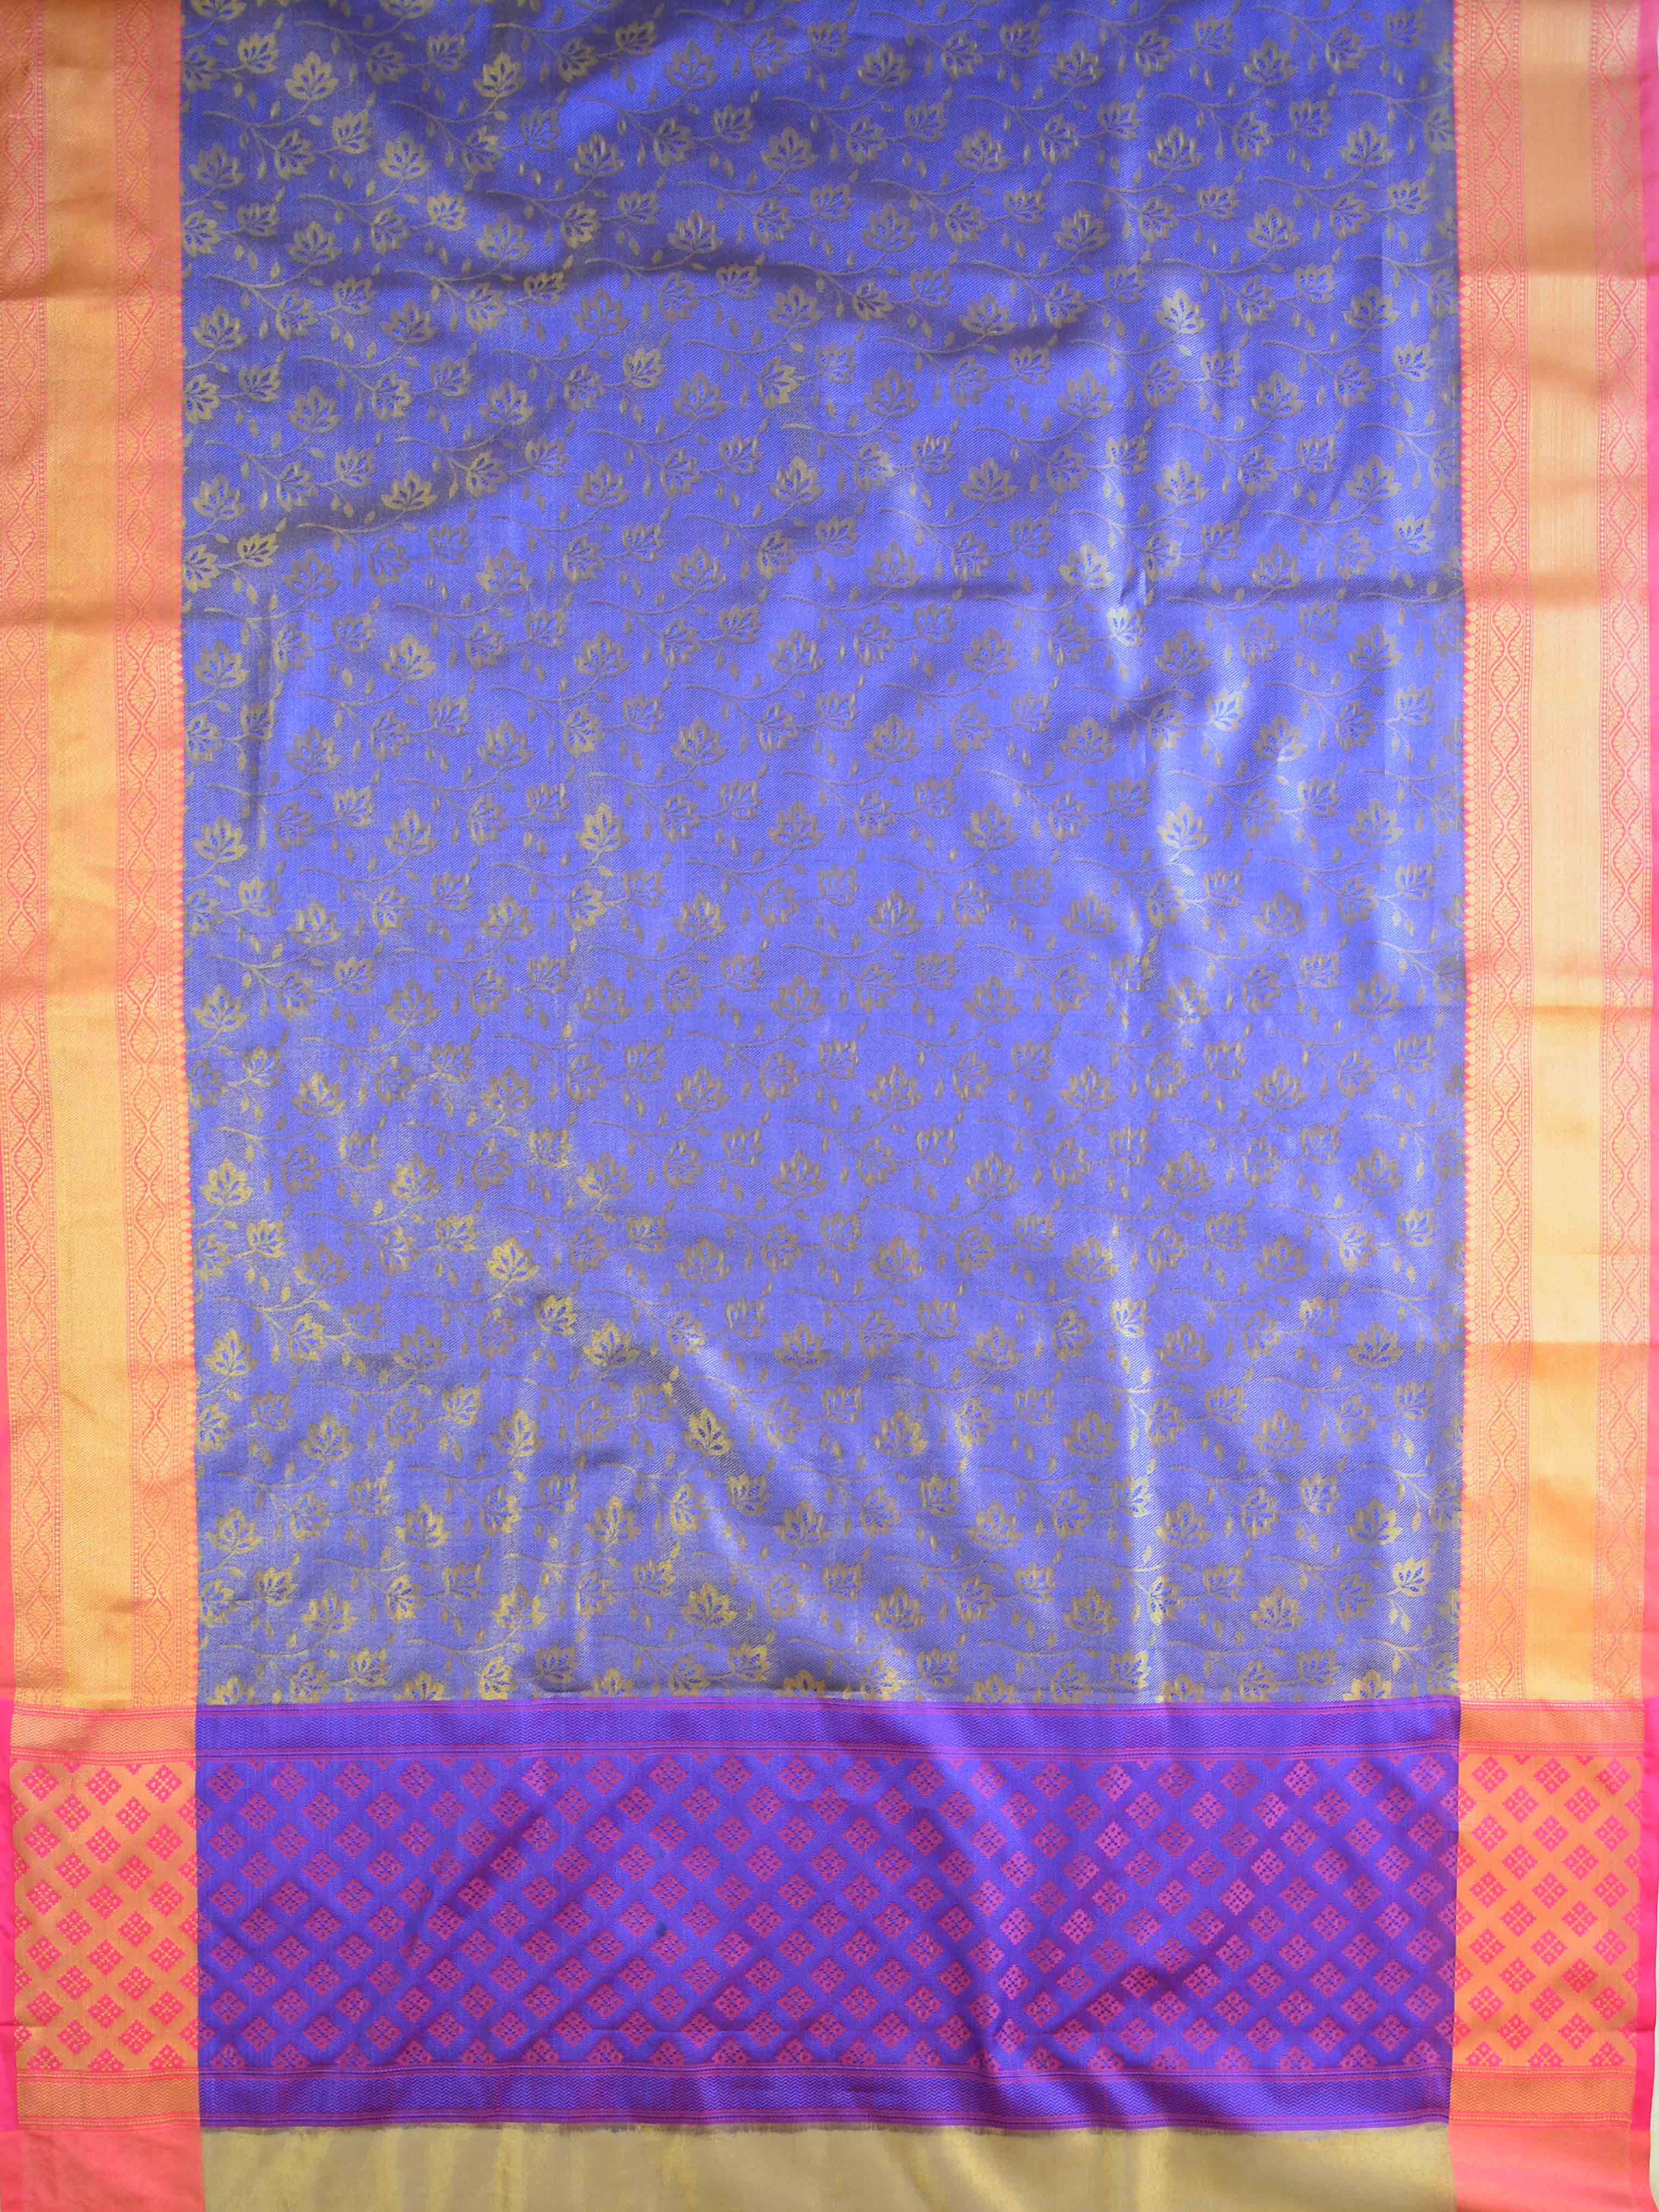 Banarasee Handwoven Self-Weaving Floral Design Tissue Saree-Blue